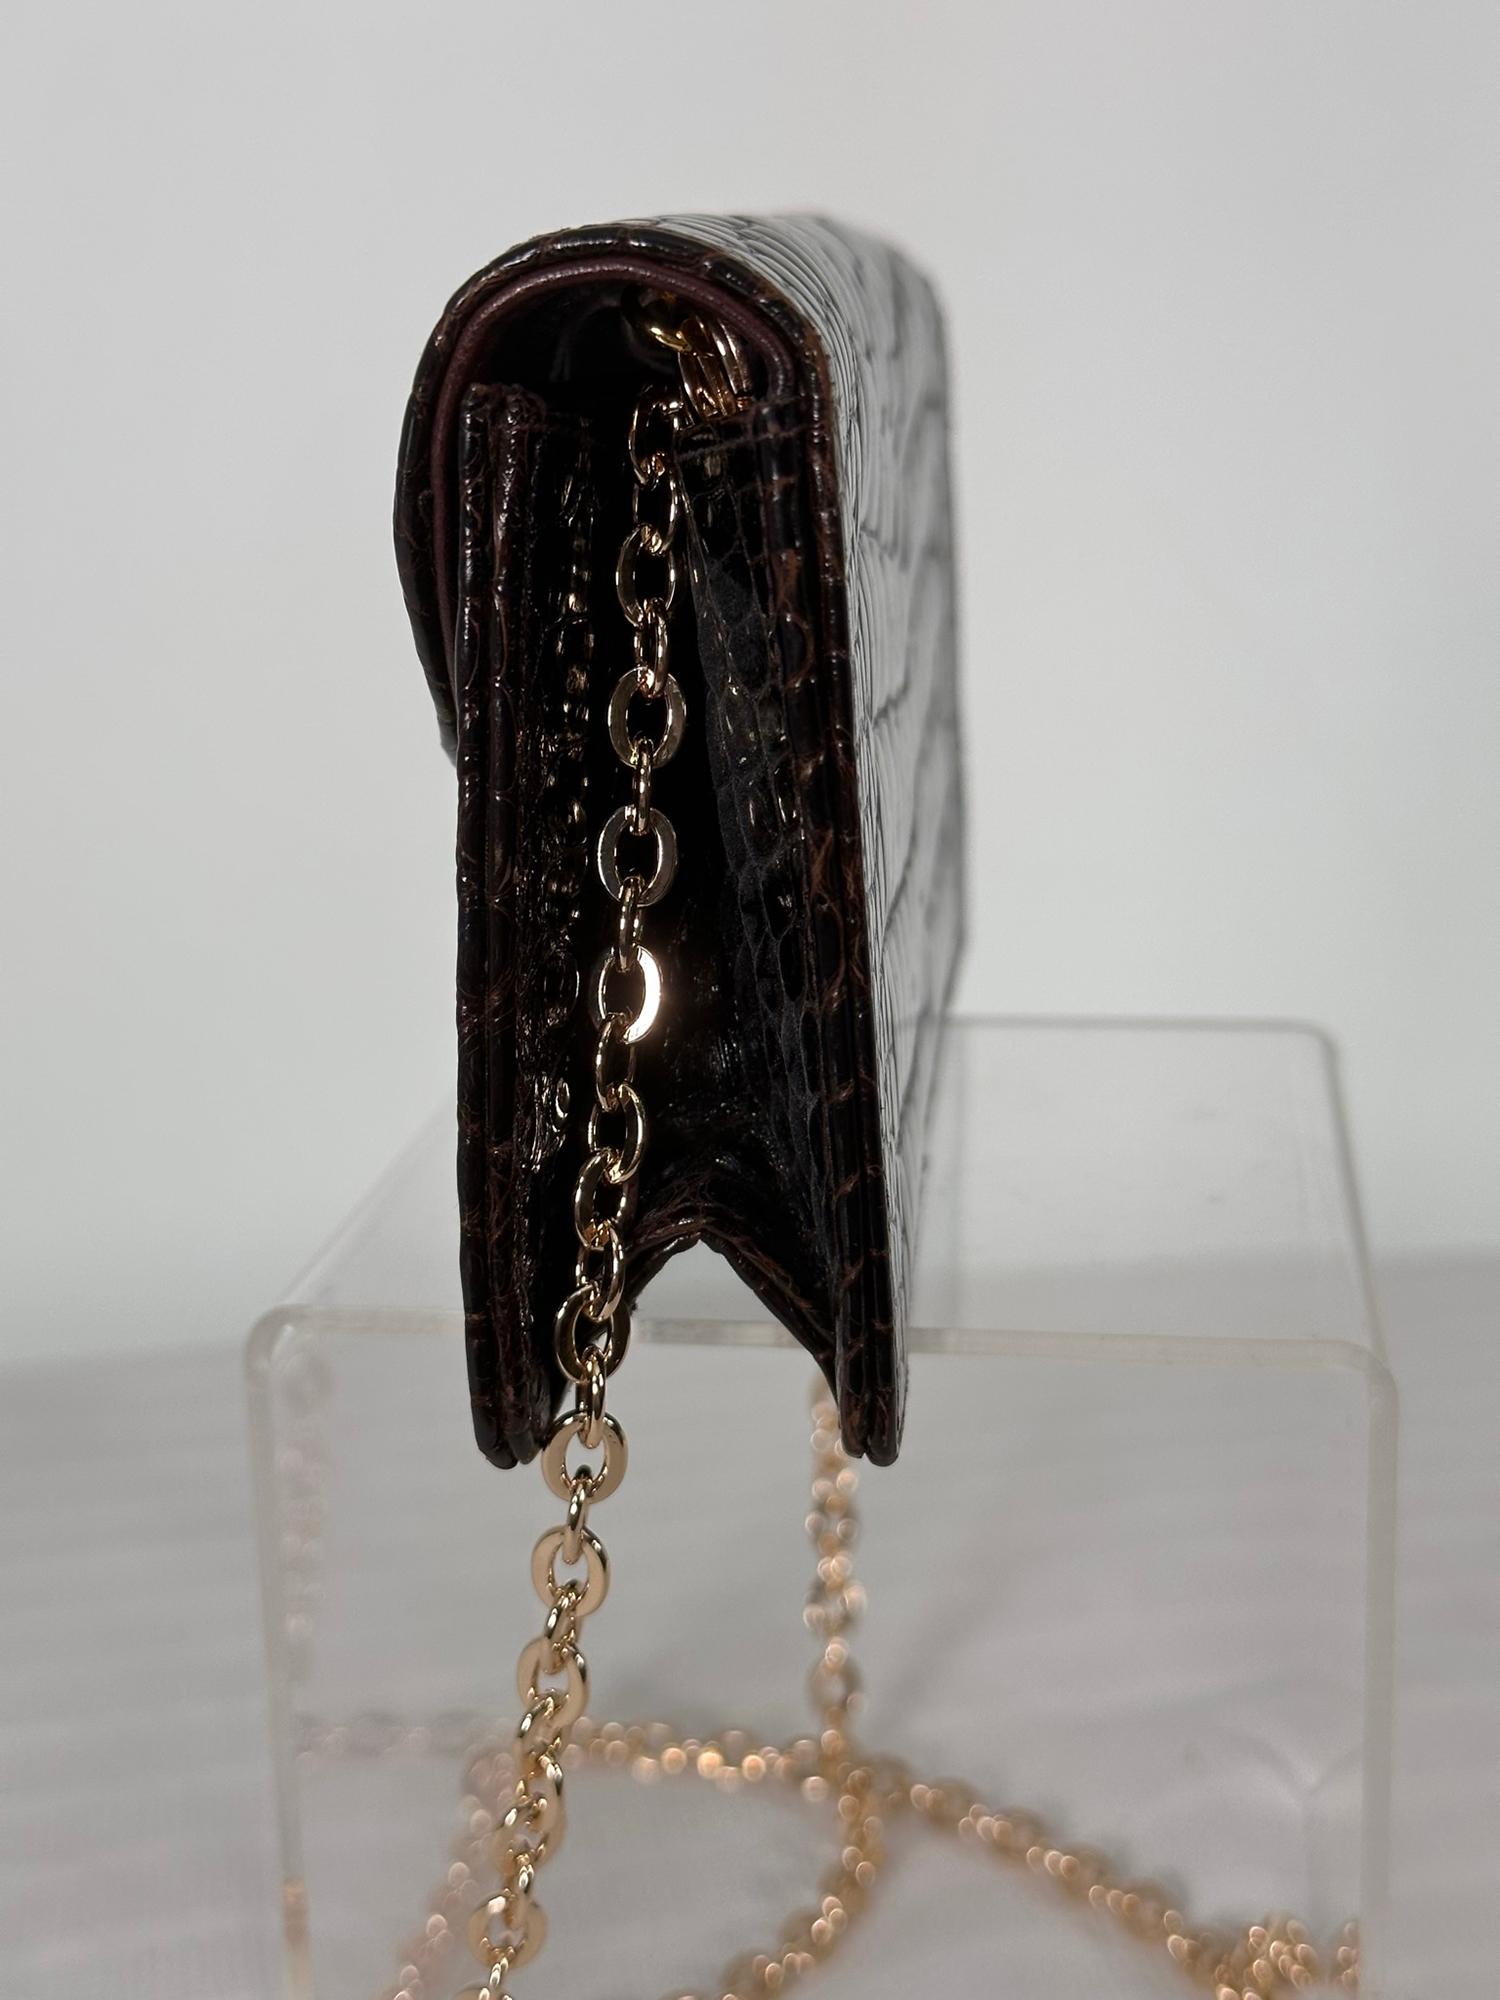 Lana of London Dark Chocolate Brown Alligator Clutch  Shoulder Bag  In Good Condition For Sale In West Palm Beach, FL